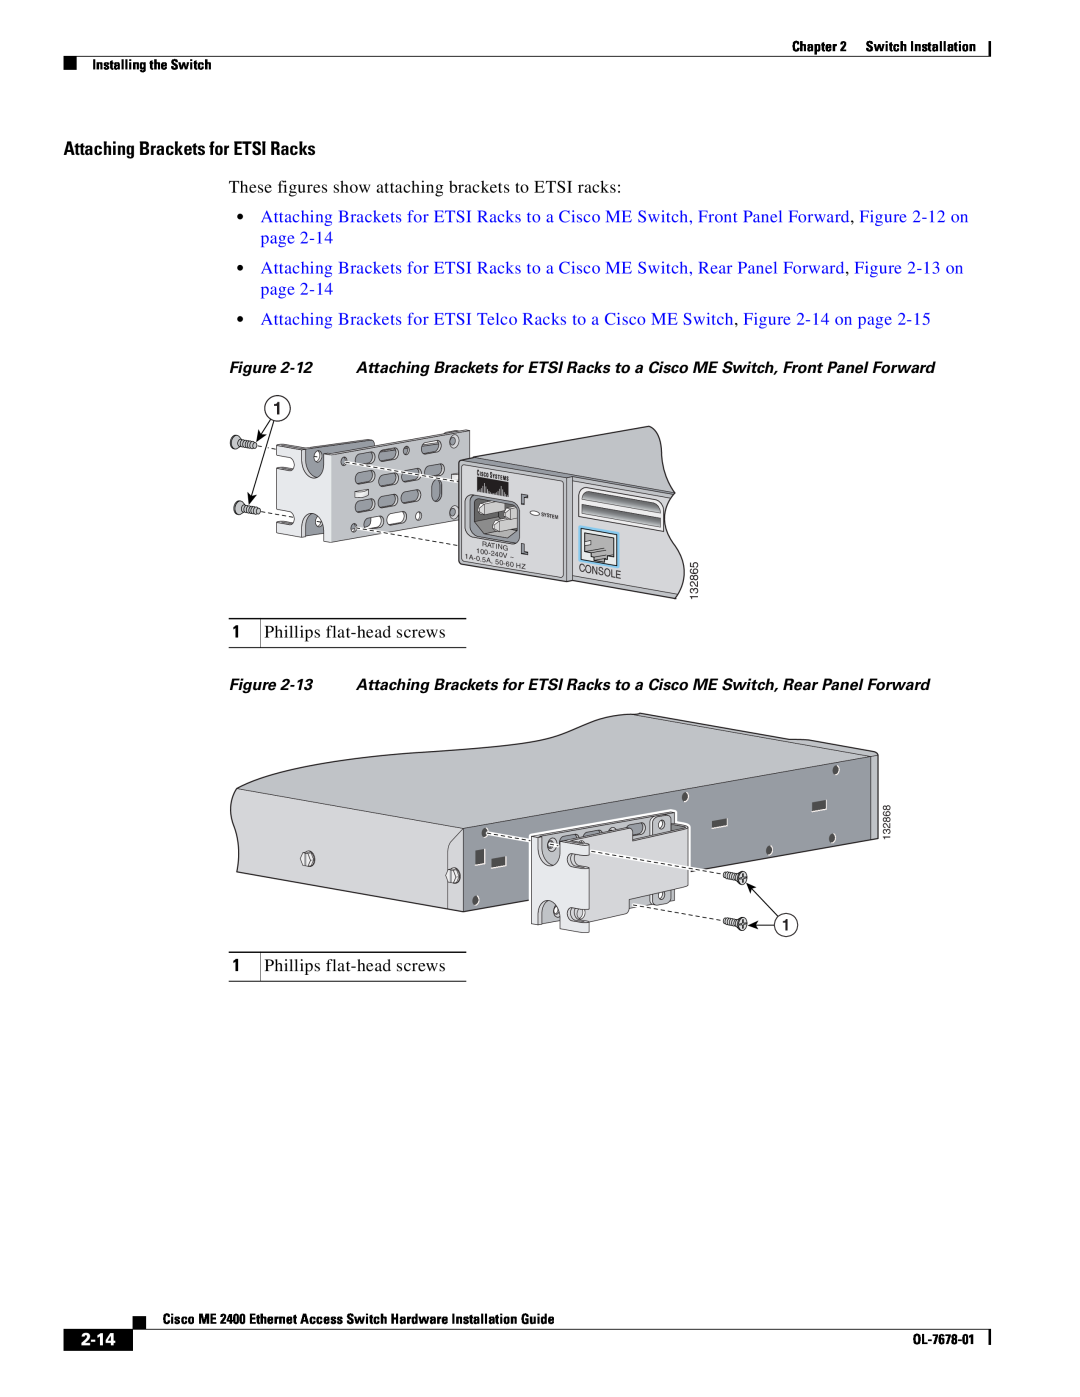 Cisco Systems ME 2400 manual Attaching Brackets for ETSI Racks, 2-14 